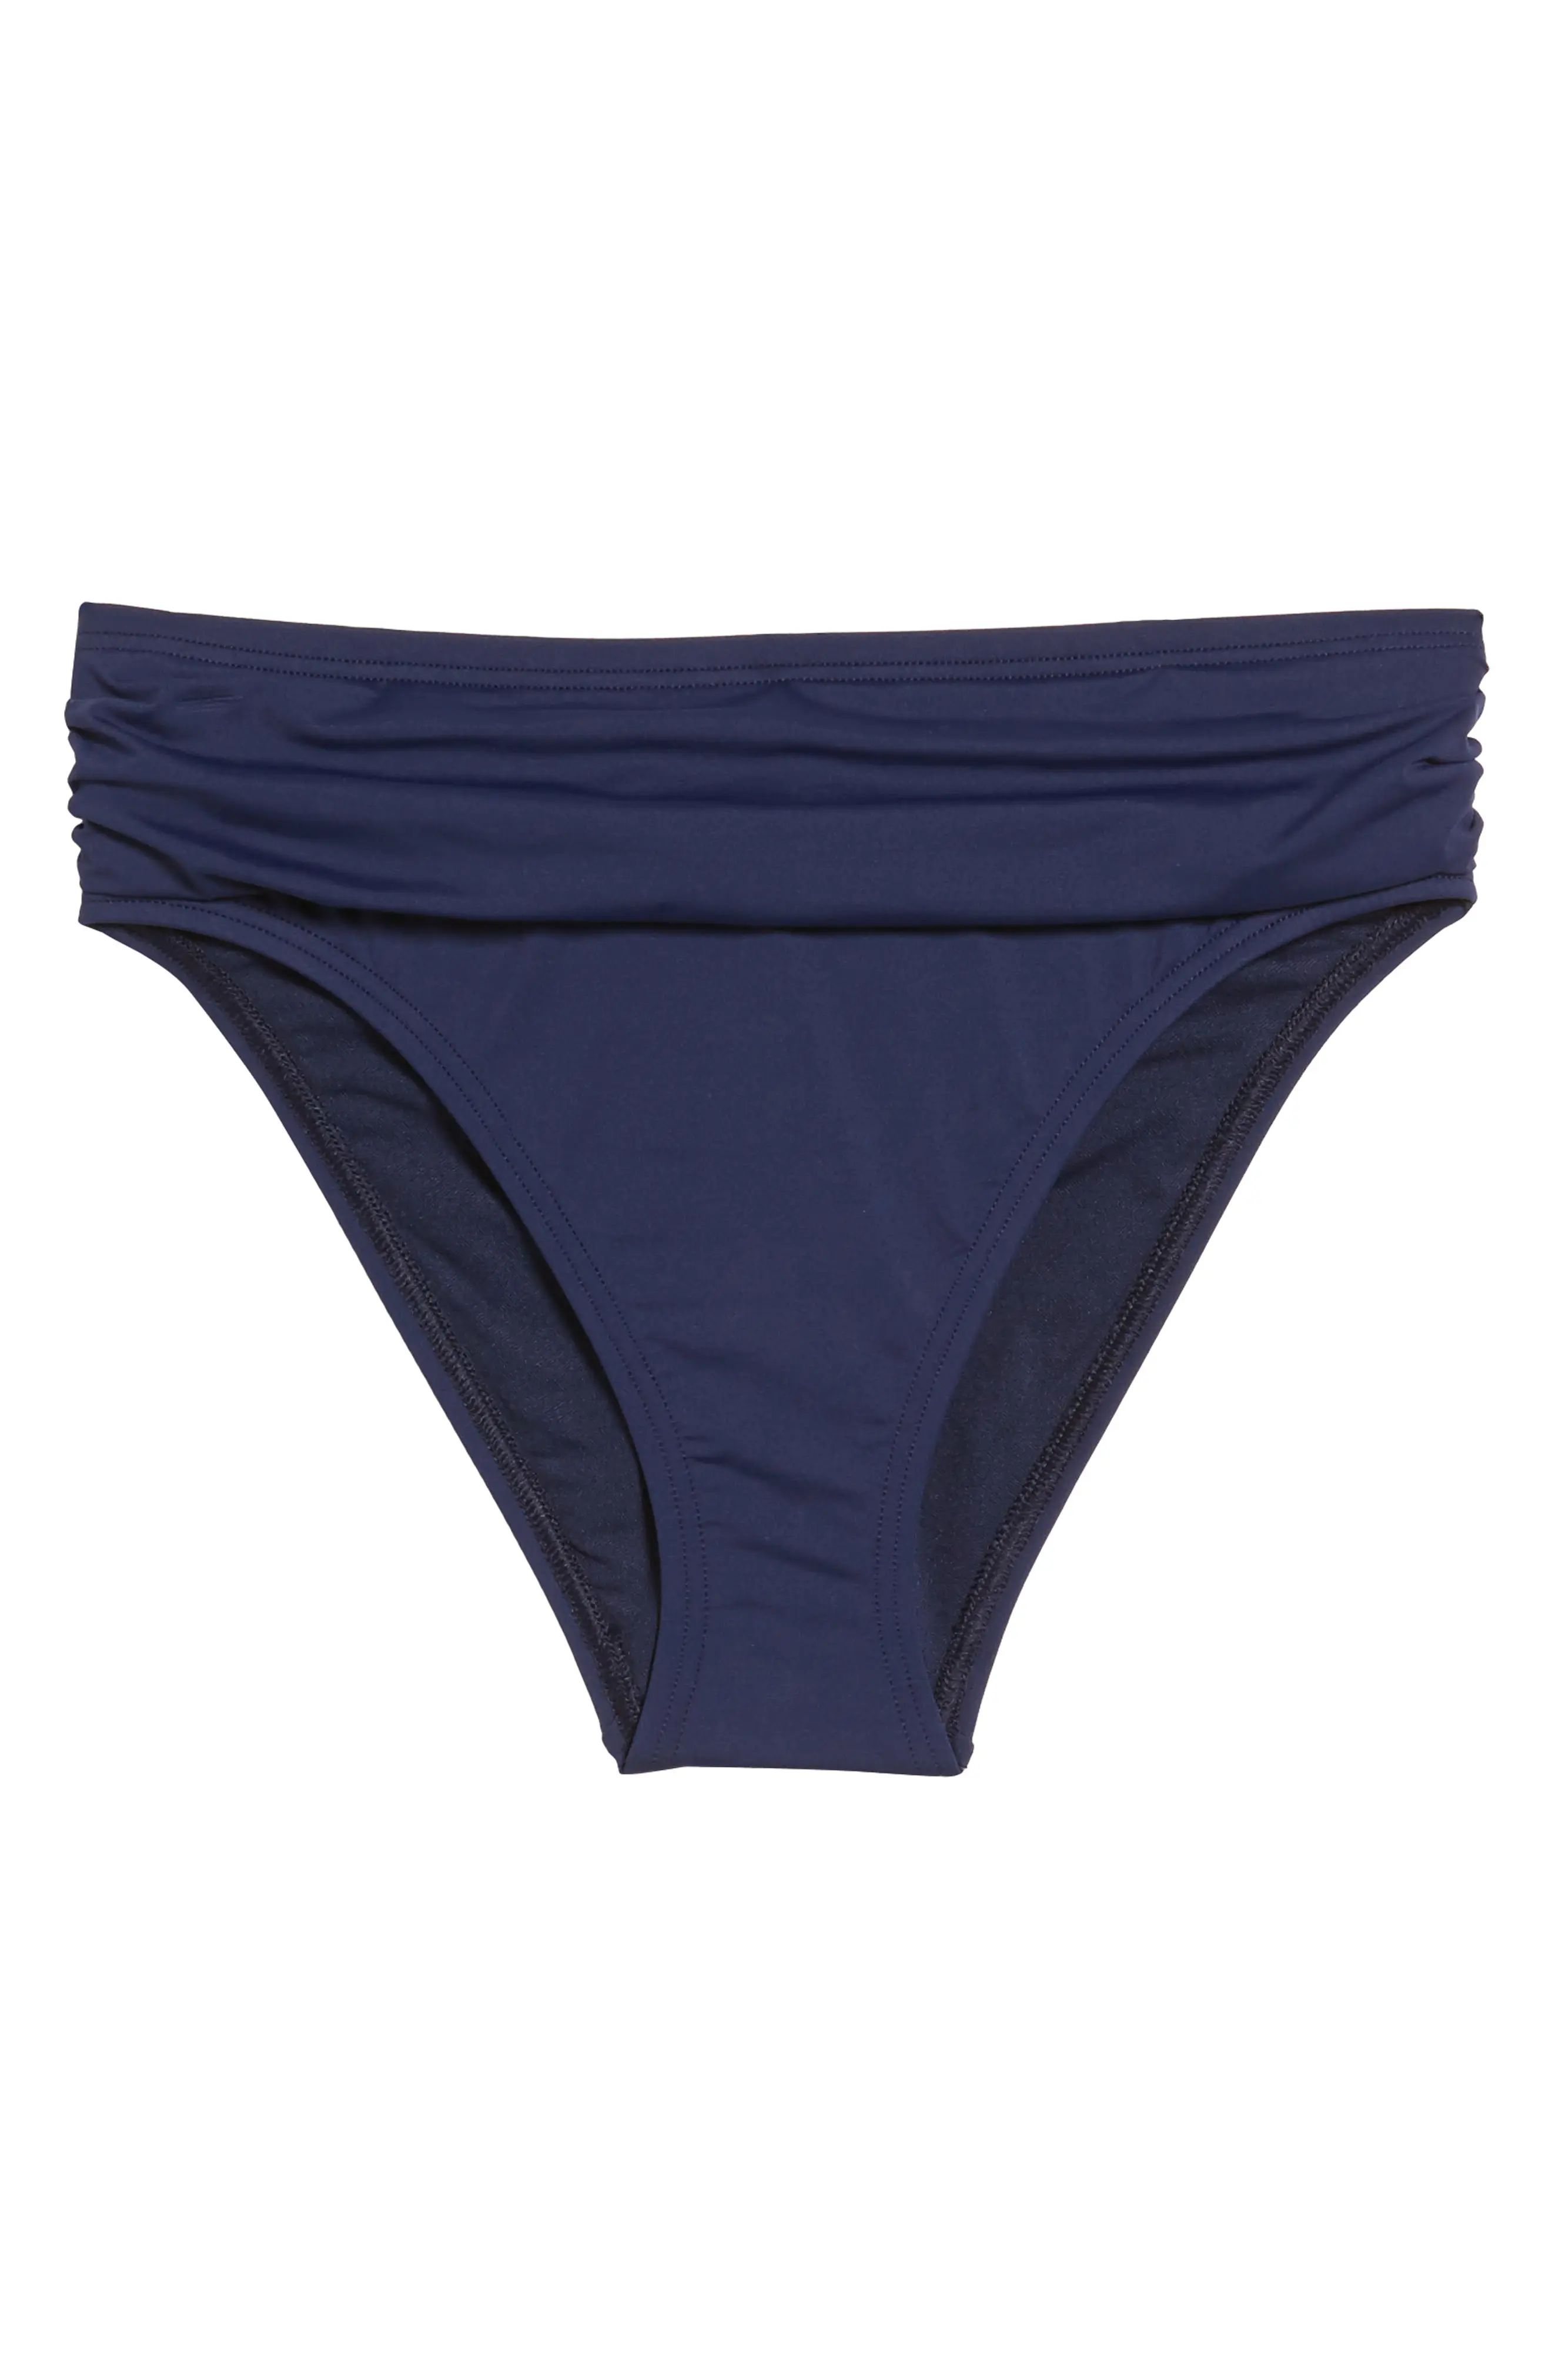 Women's Tommy Bahama 'Pearl' High Waist Bikini Bottoms, Size X-Small - Blue | Nordstrom